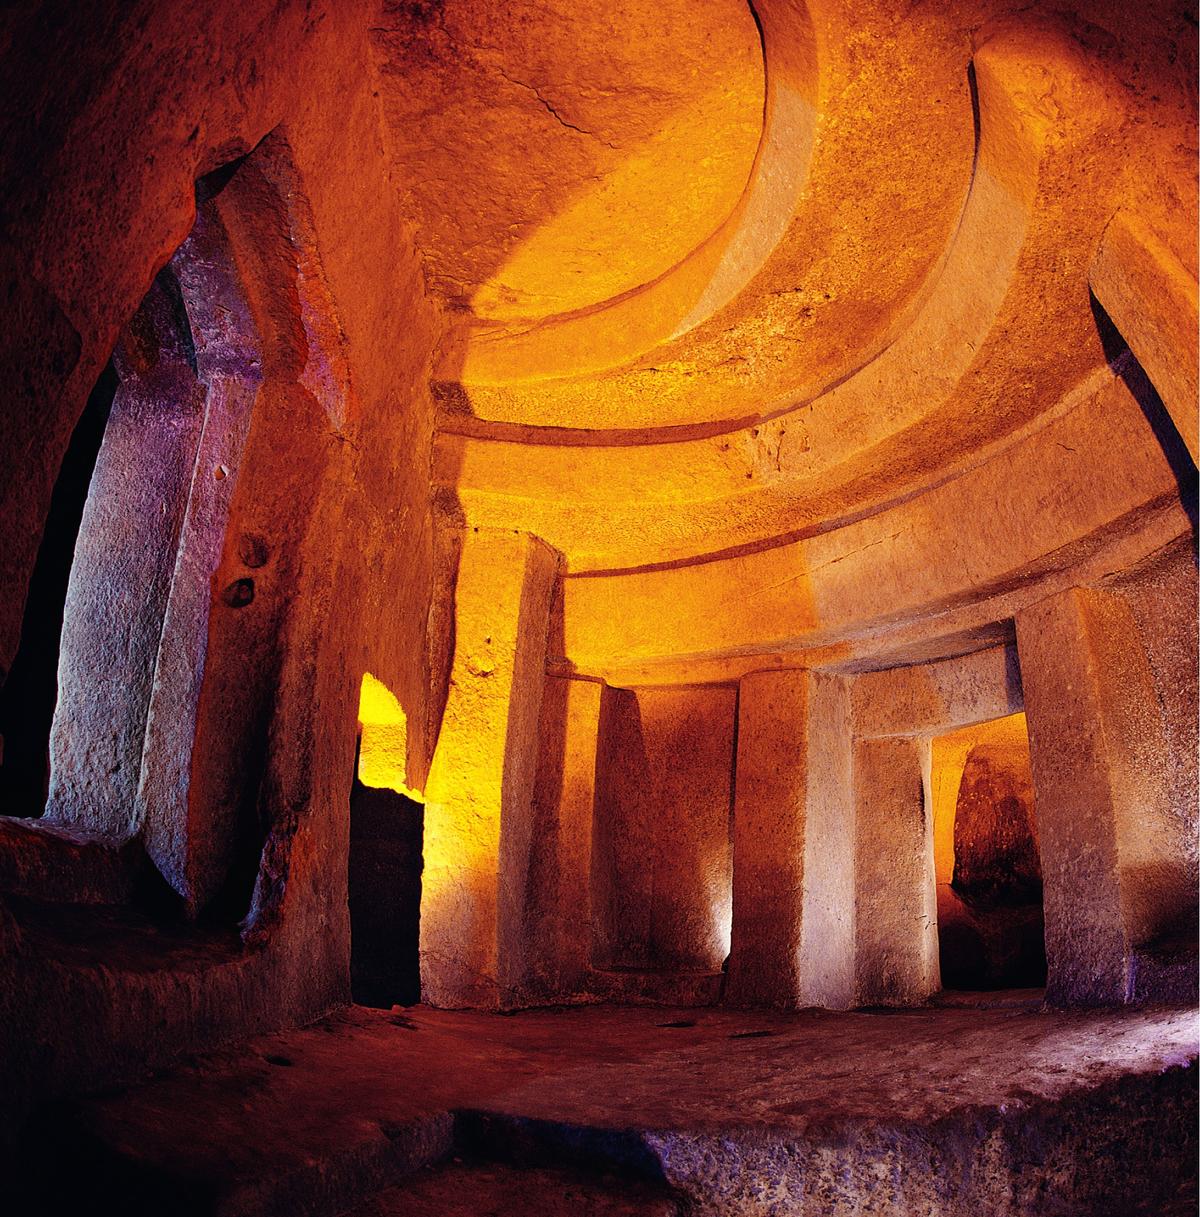 Hal Saflieni Hypogeum, an ancient underground burial chamber. (<a href="http://viewingmalta.com/" target="_blank" rel="noopener" data-saferedirecturl="https://www.google.com/url?q=http://ViewingMalta.com&source=gmail&ust=1568120820722000&usg=AFQjCNFvAqn55eDgepA9T2ON7keD_G5oAw">ViewingMalta.com</a>)